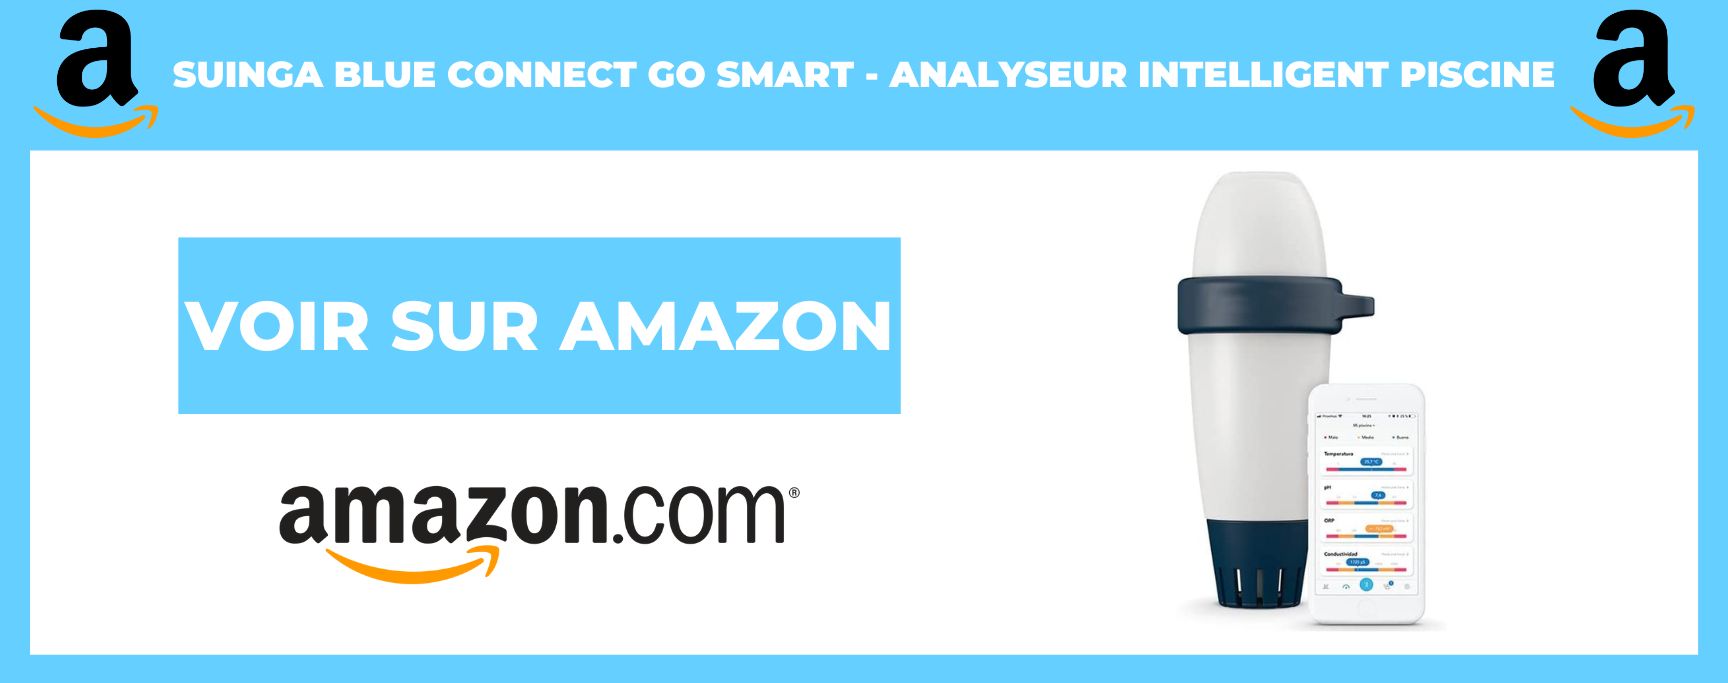 Suinga Blue Connect Go Smart - Analyseur Intelligent Piscine